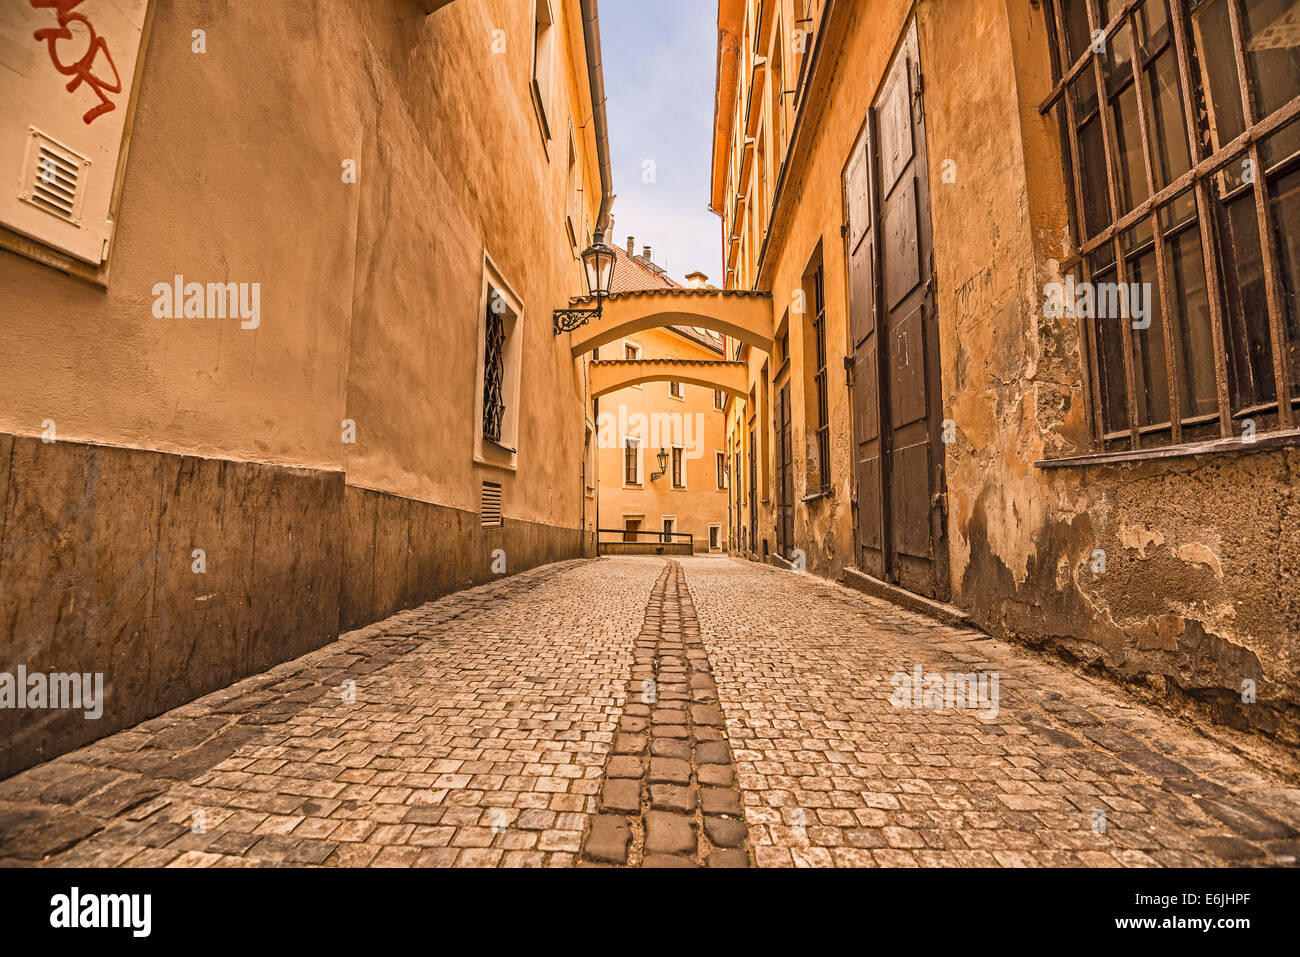 Pedestrian alley in Prague, Old town (stare mesto) Stock Photo